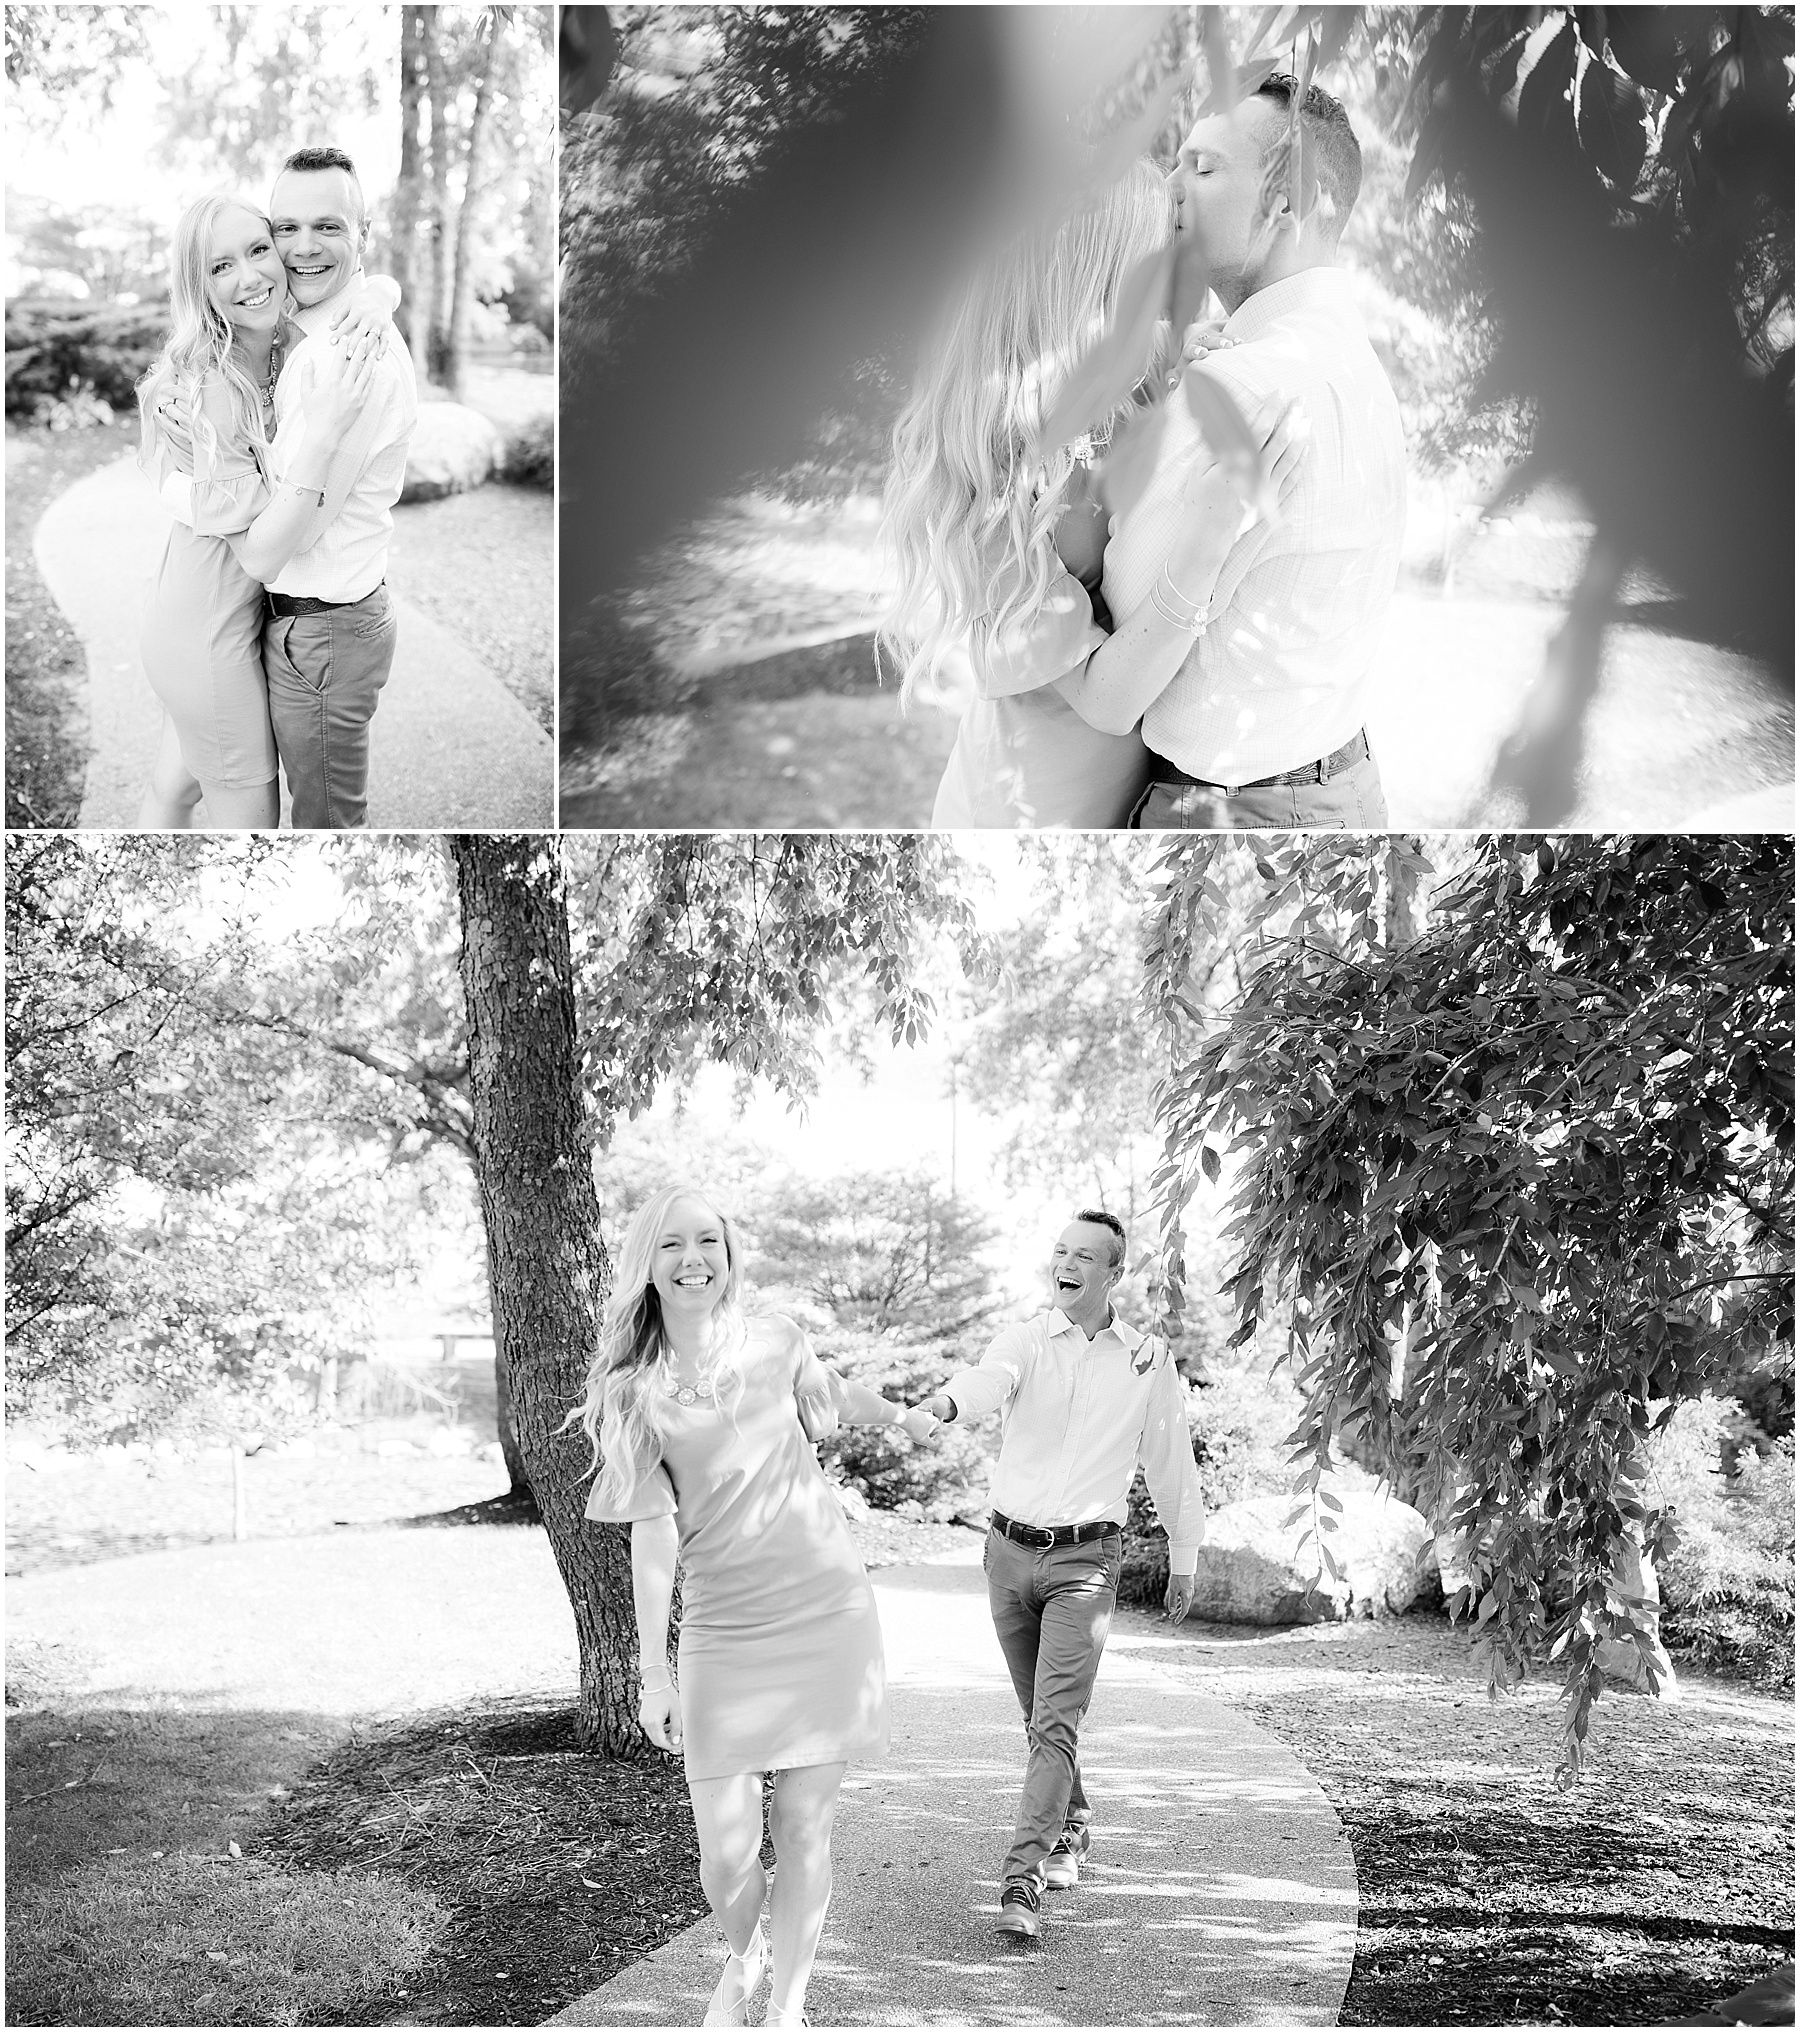 Soon to be husband following his fiancé. Indianapolis Engagement Photographer, Raindancer Studios